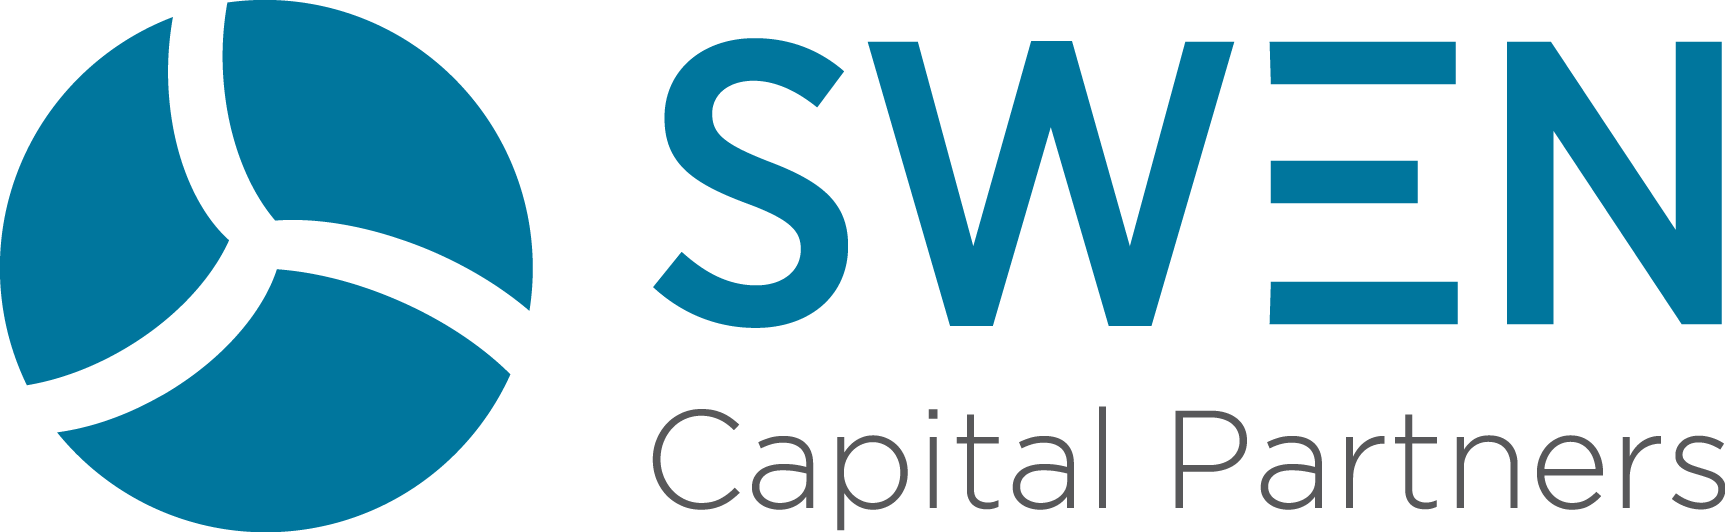 SwenCapitalPartners logo 4c